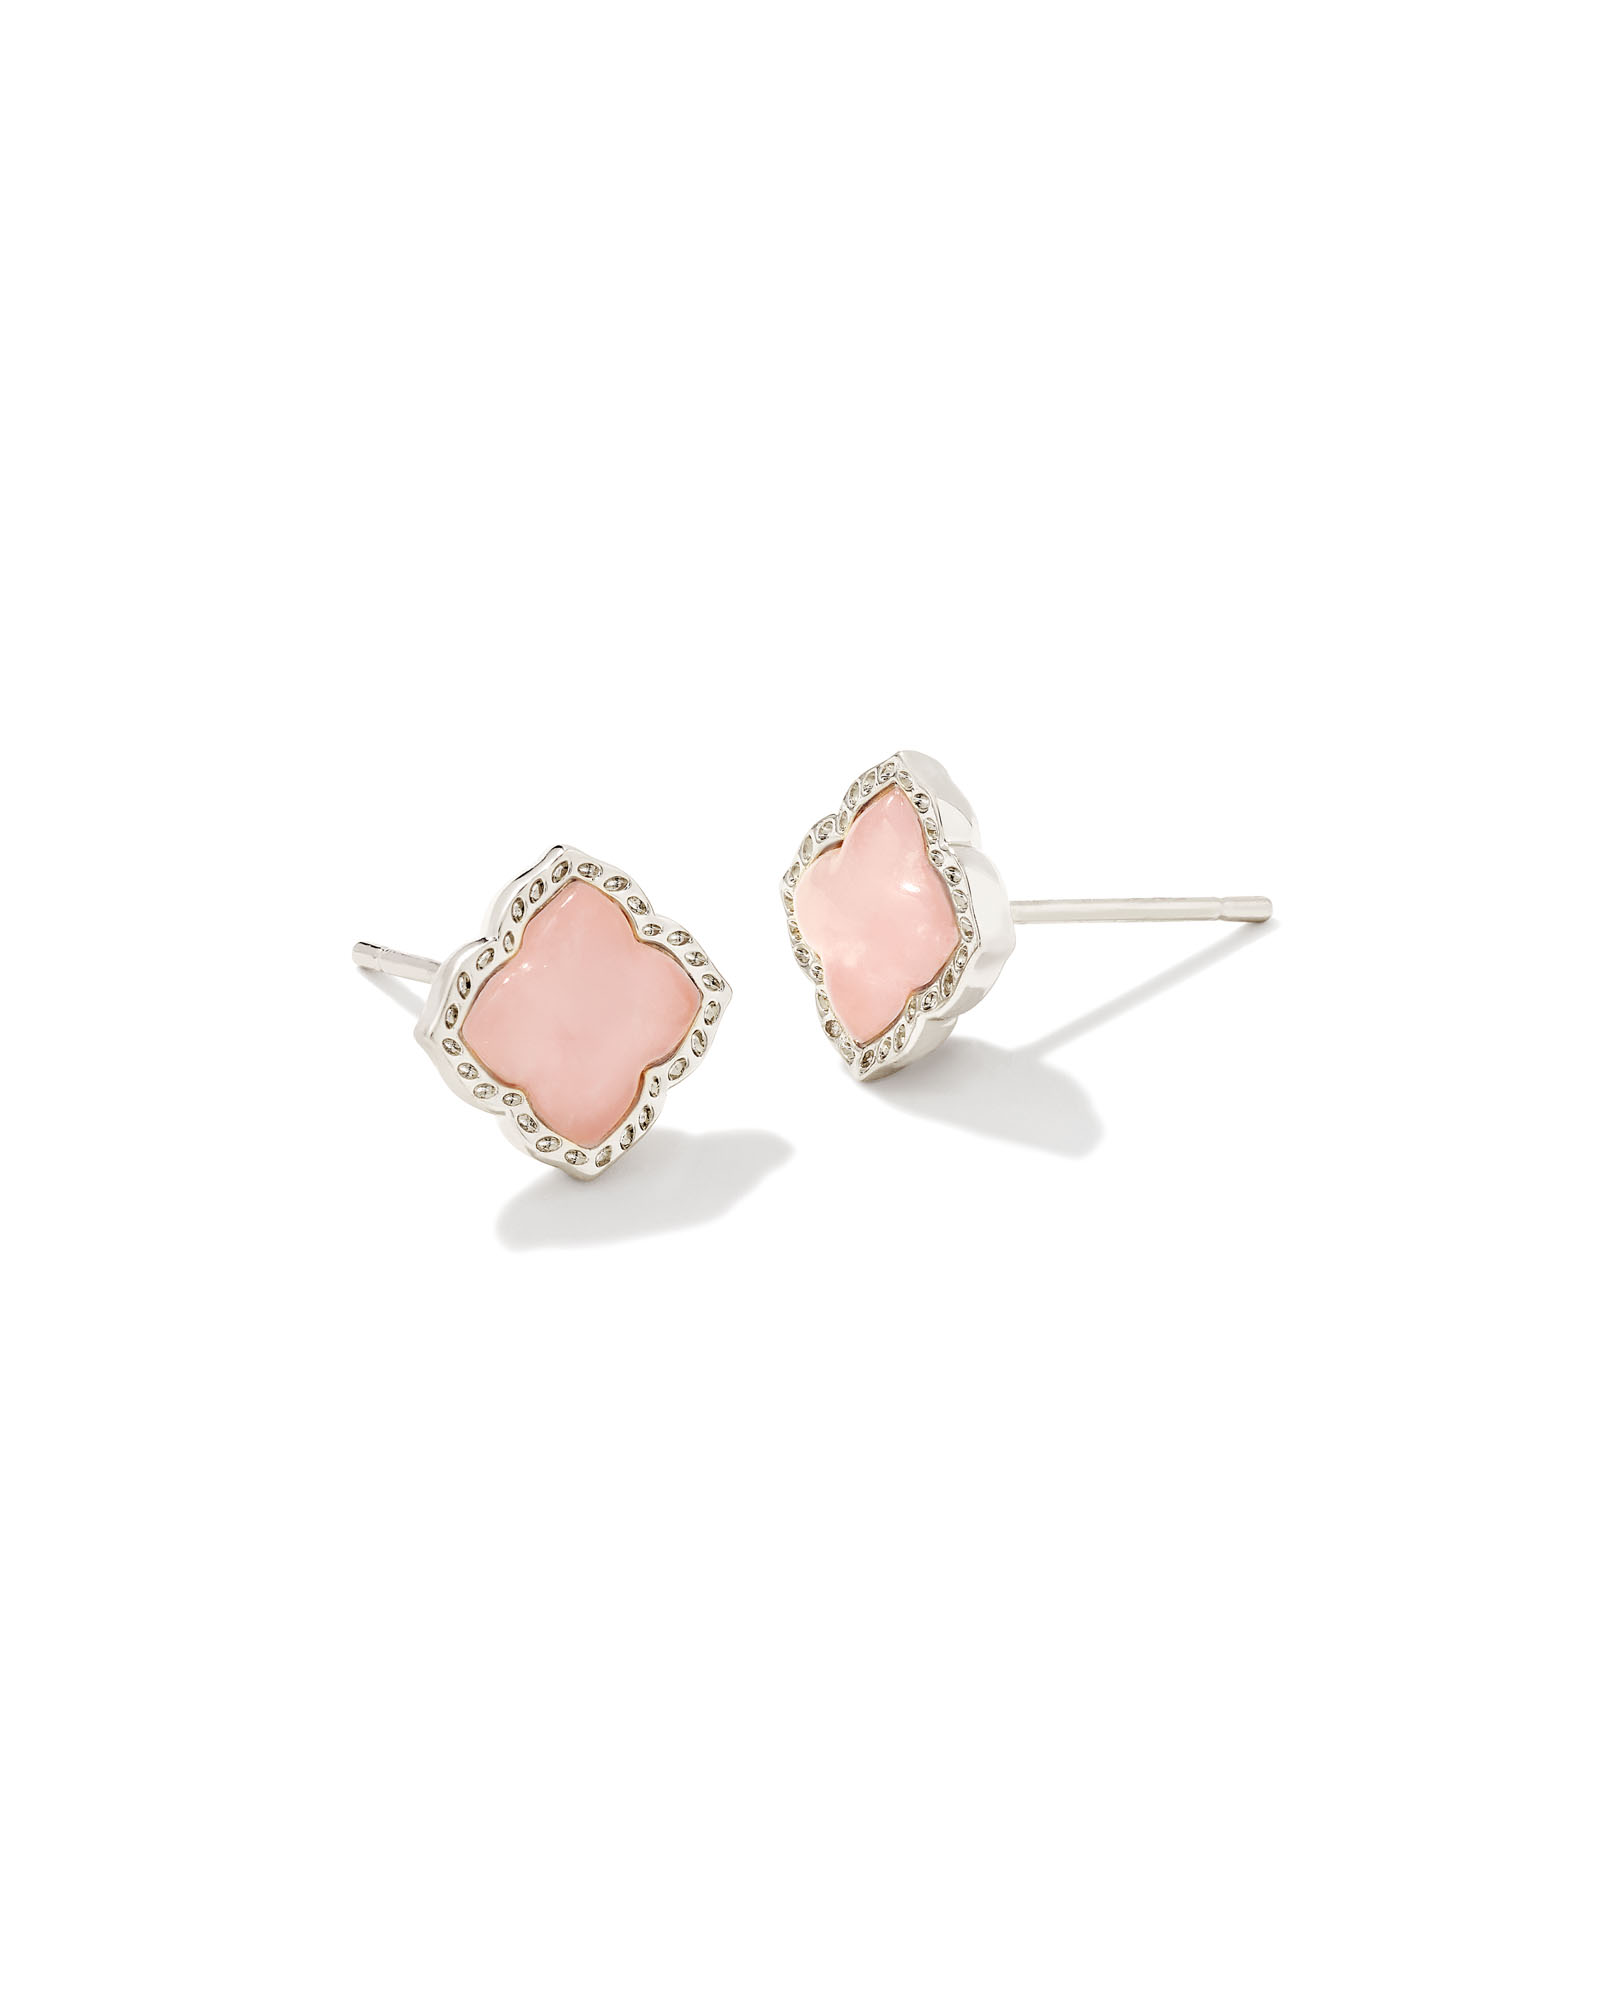 Mallory Silver Stud Earrings in Rose Quartz | Kendra Scott